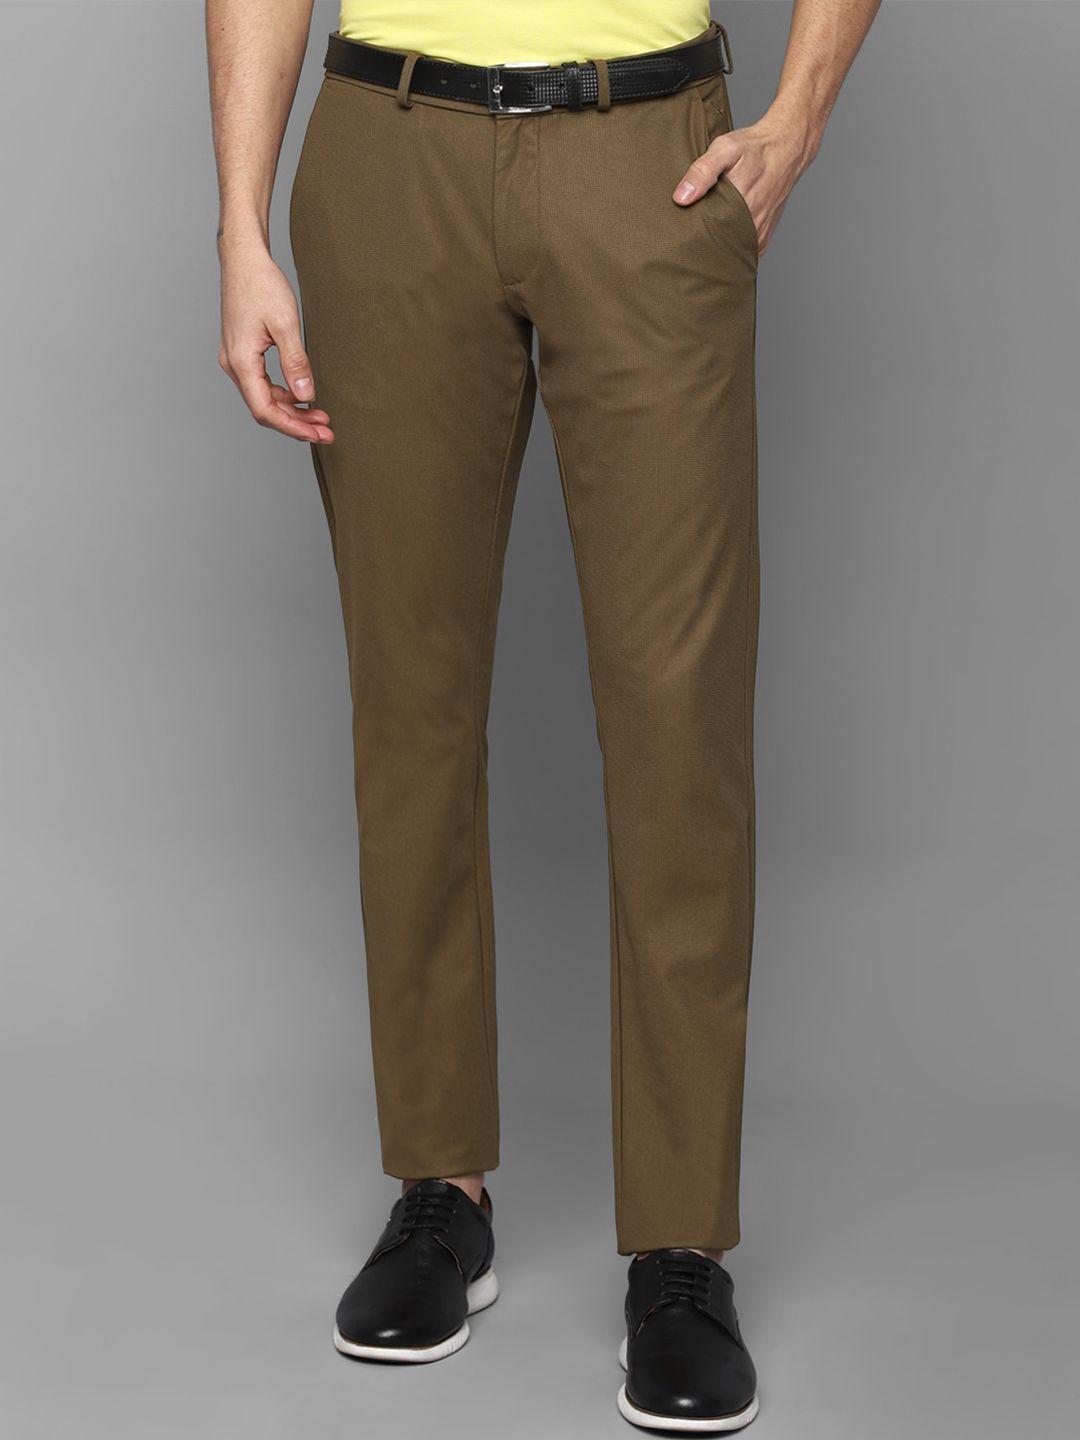 allen solly men brown textured slim fit trousers